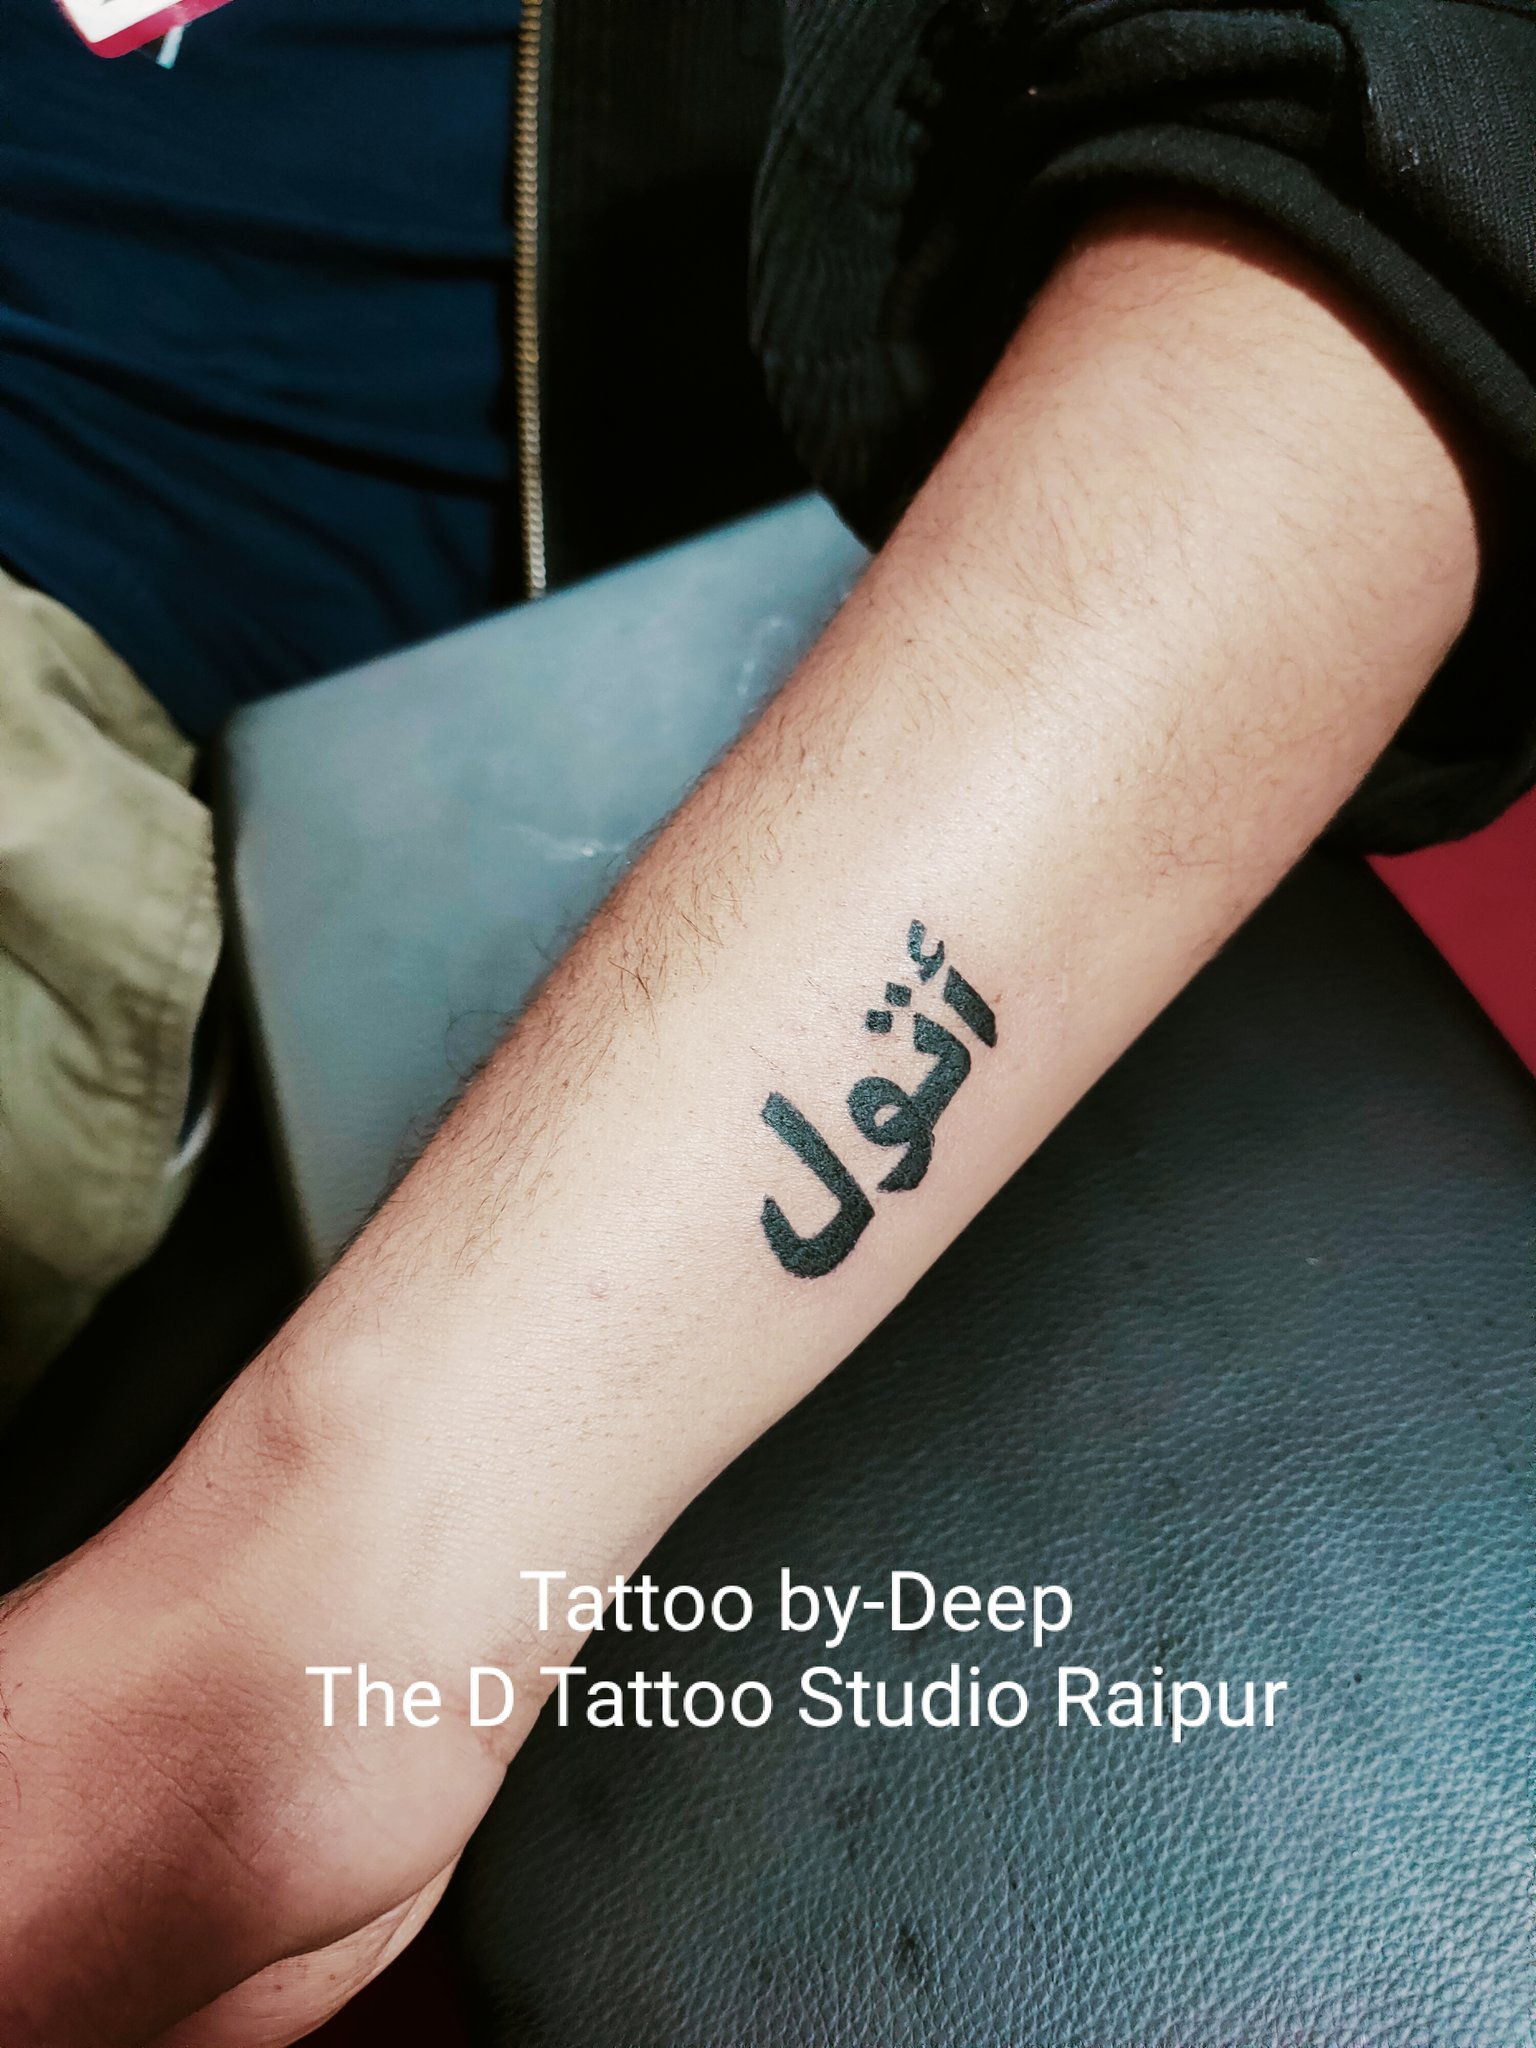 The D Tattoo Studio on Twitter: 